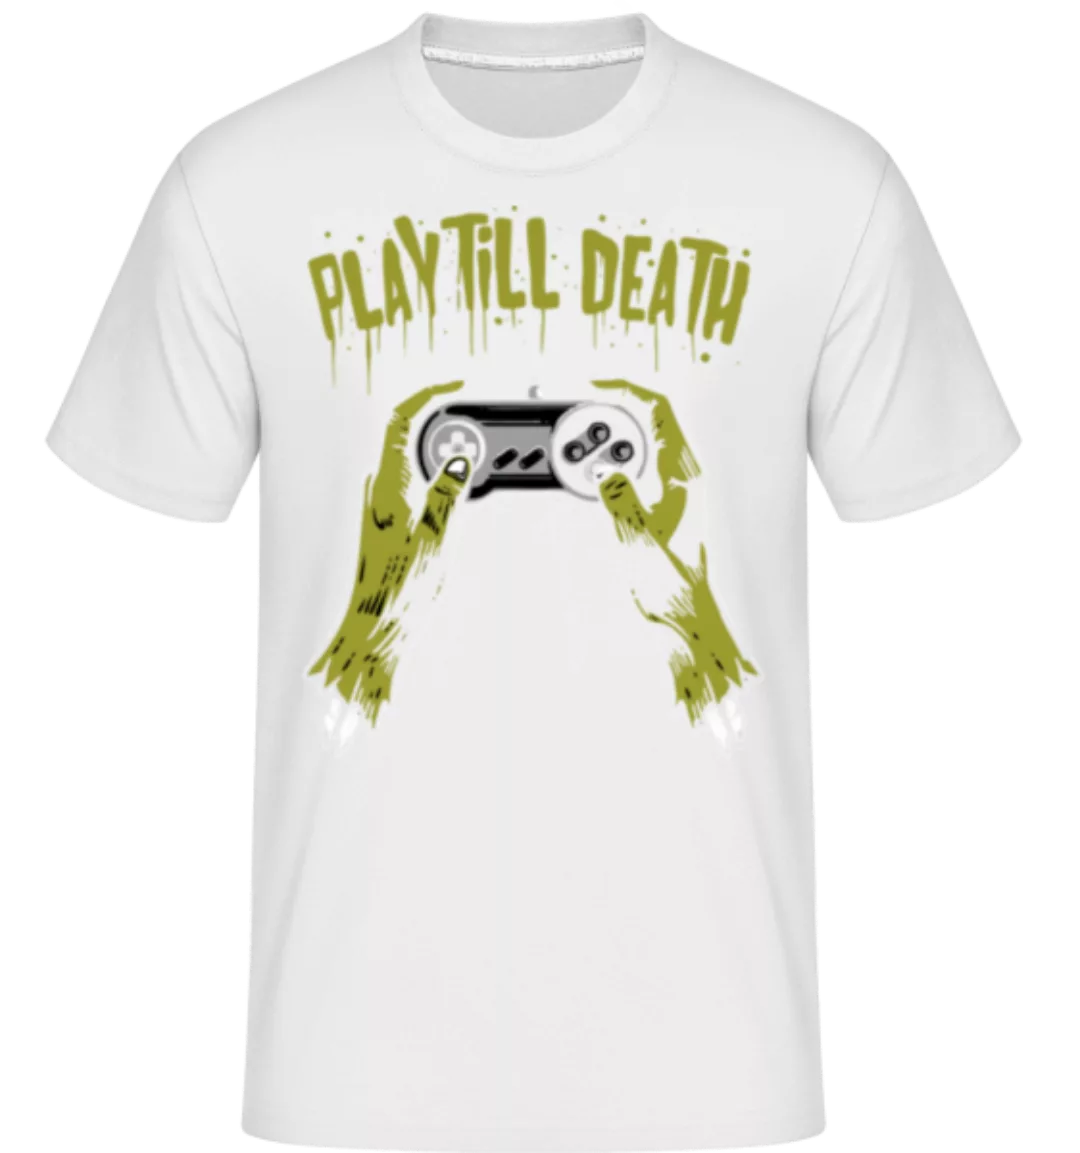 Play Till Death · Shirtinator Männer T-Shirt günstig online kaufen